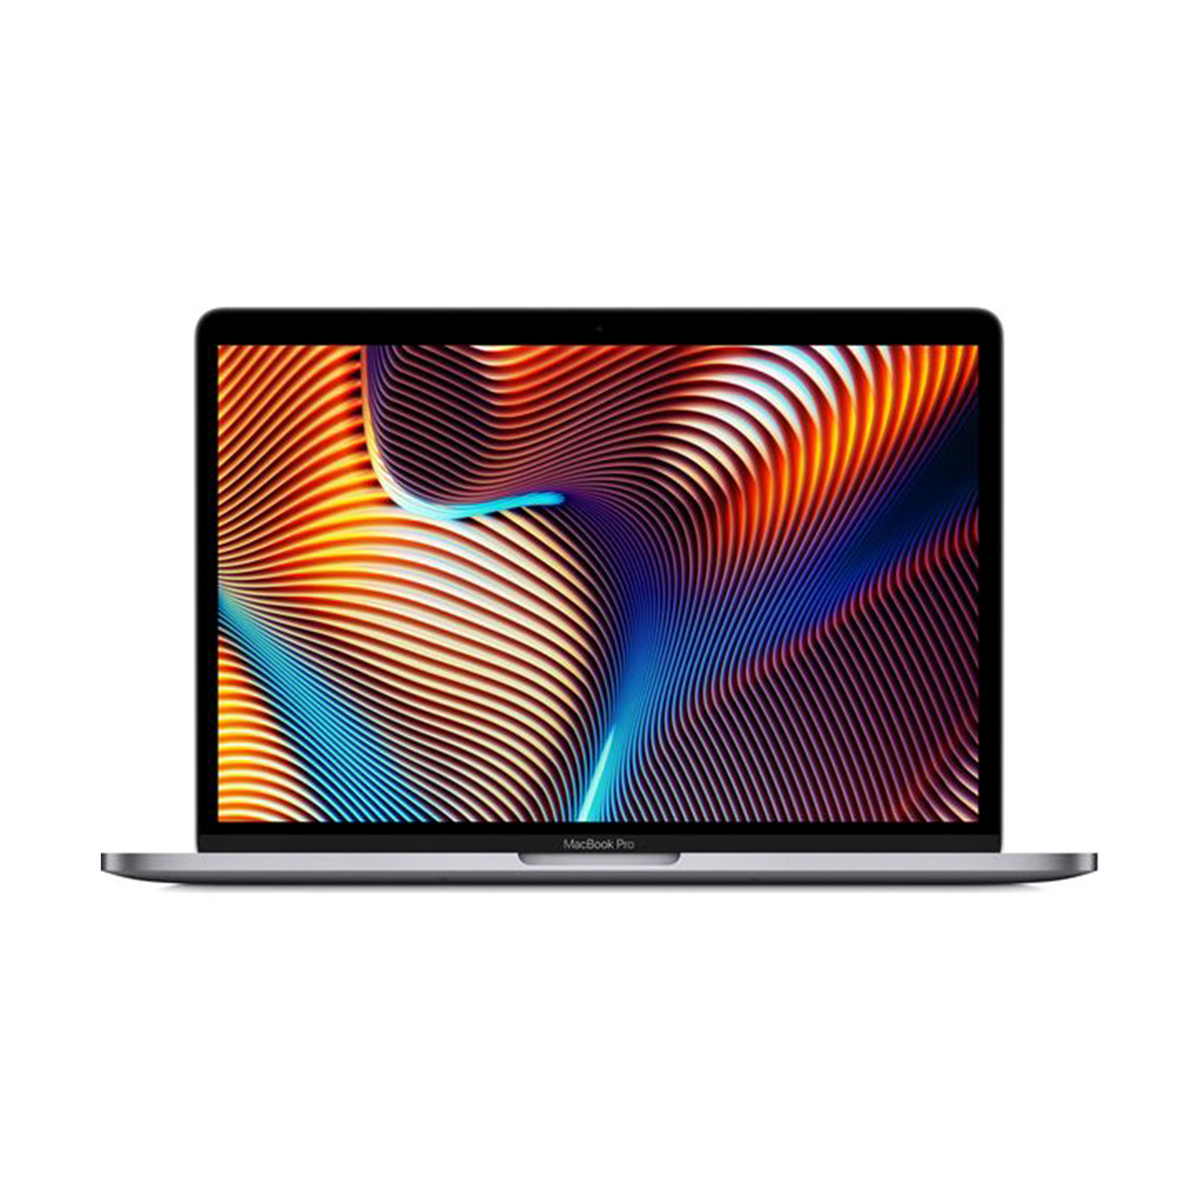 Apple MacBook Pro MV962B/A 13.3-Inch Retina Display with Touch Bar & Toutch ID,Intel Core i5,8GB RAM,256GB SSD,Space Grey